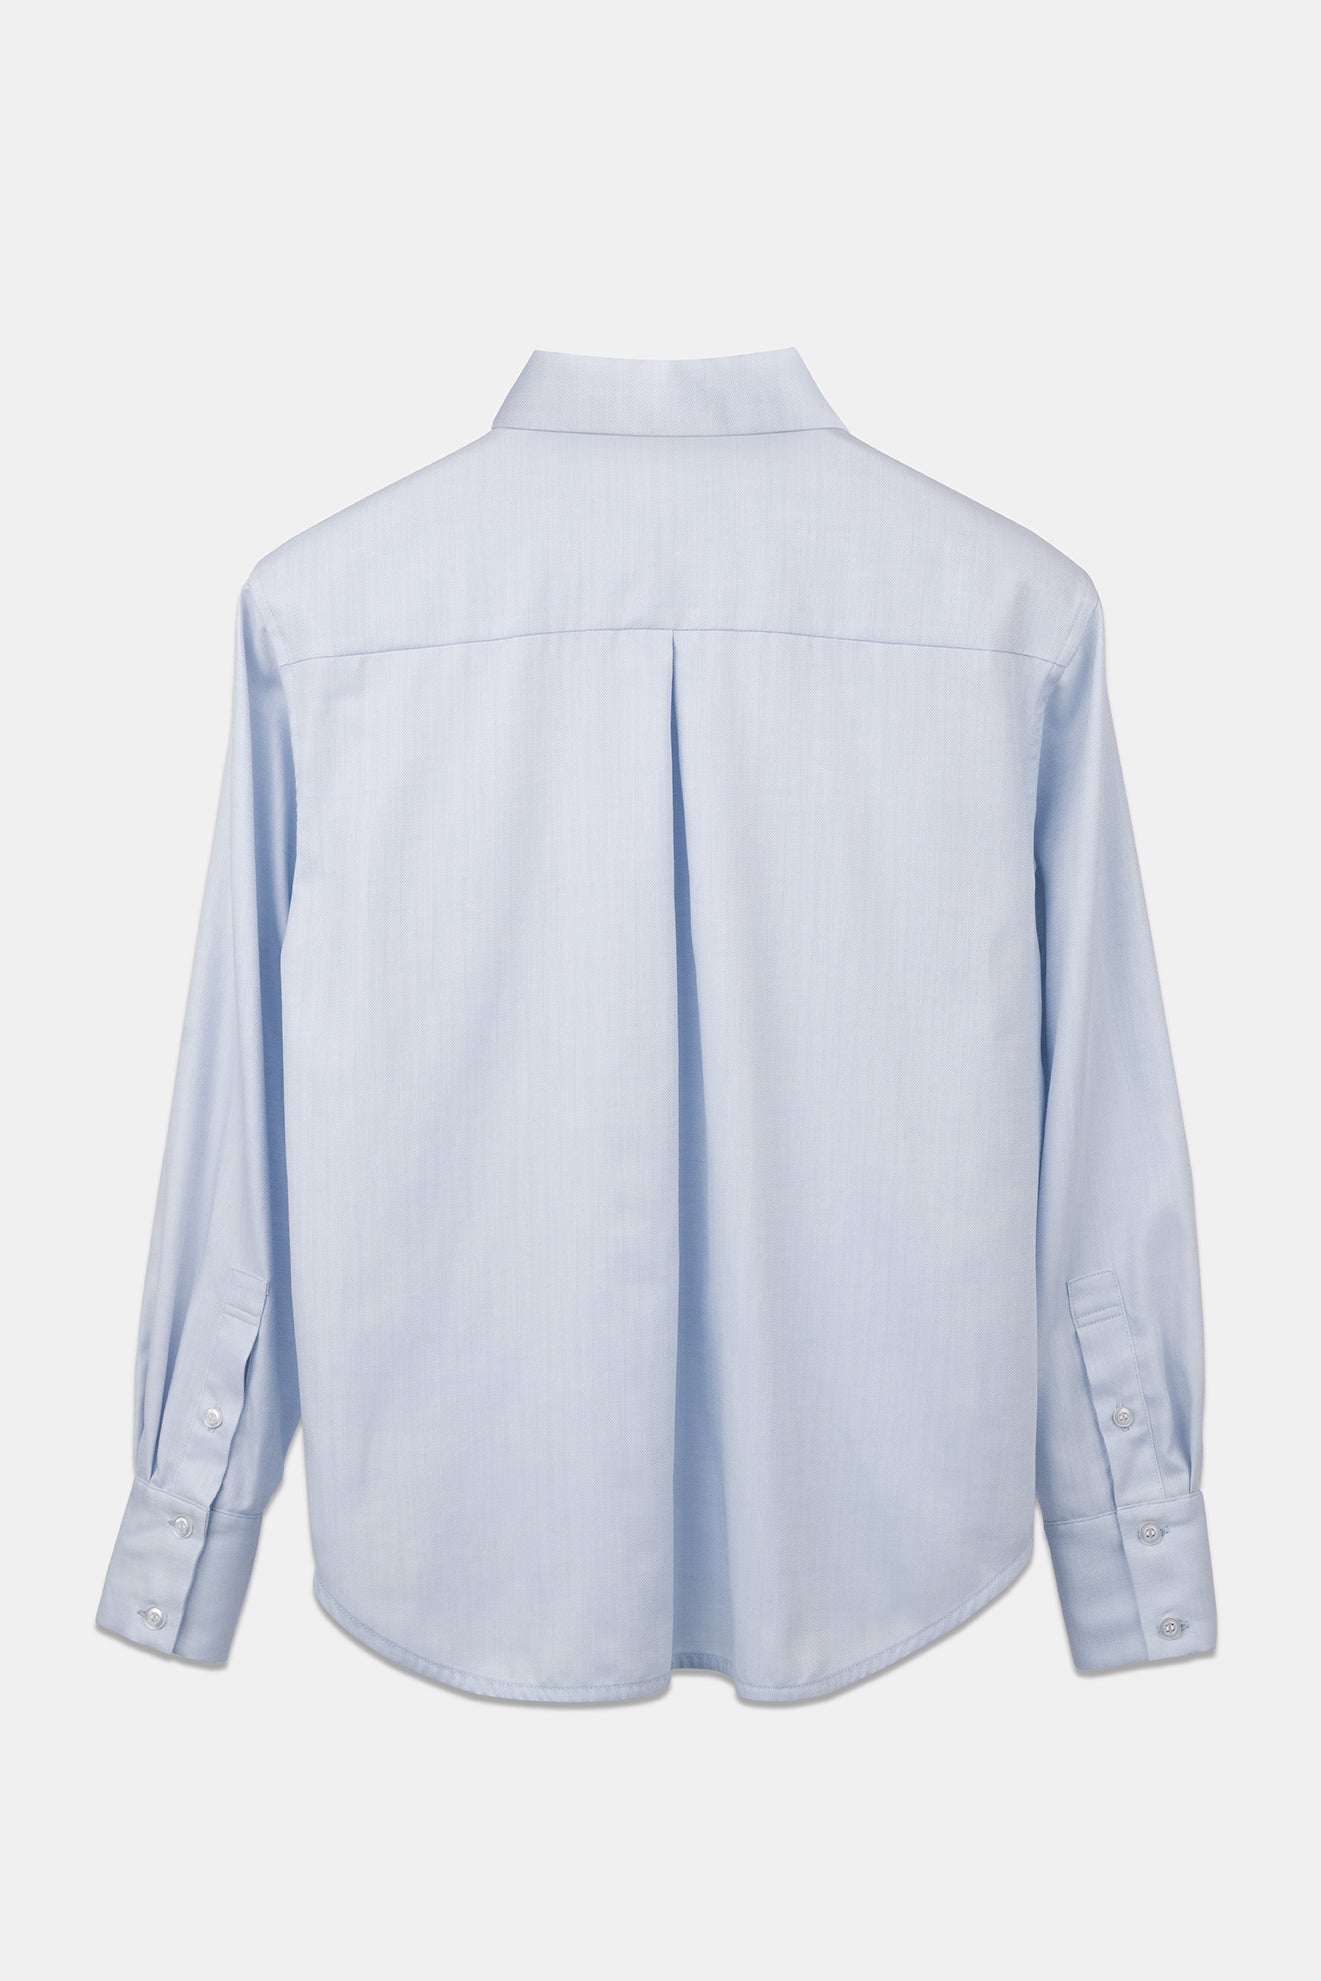 SEANNUNG - WOMEN - Double Pocket  Shirt 素面雙口袋襯衫